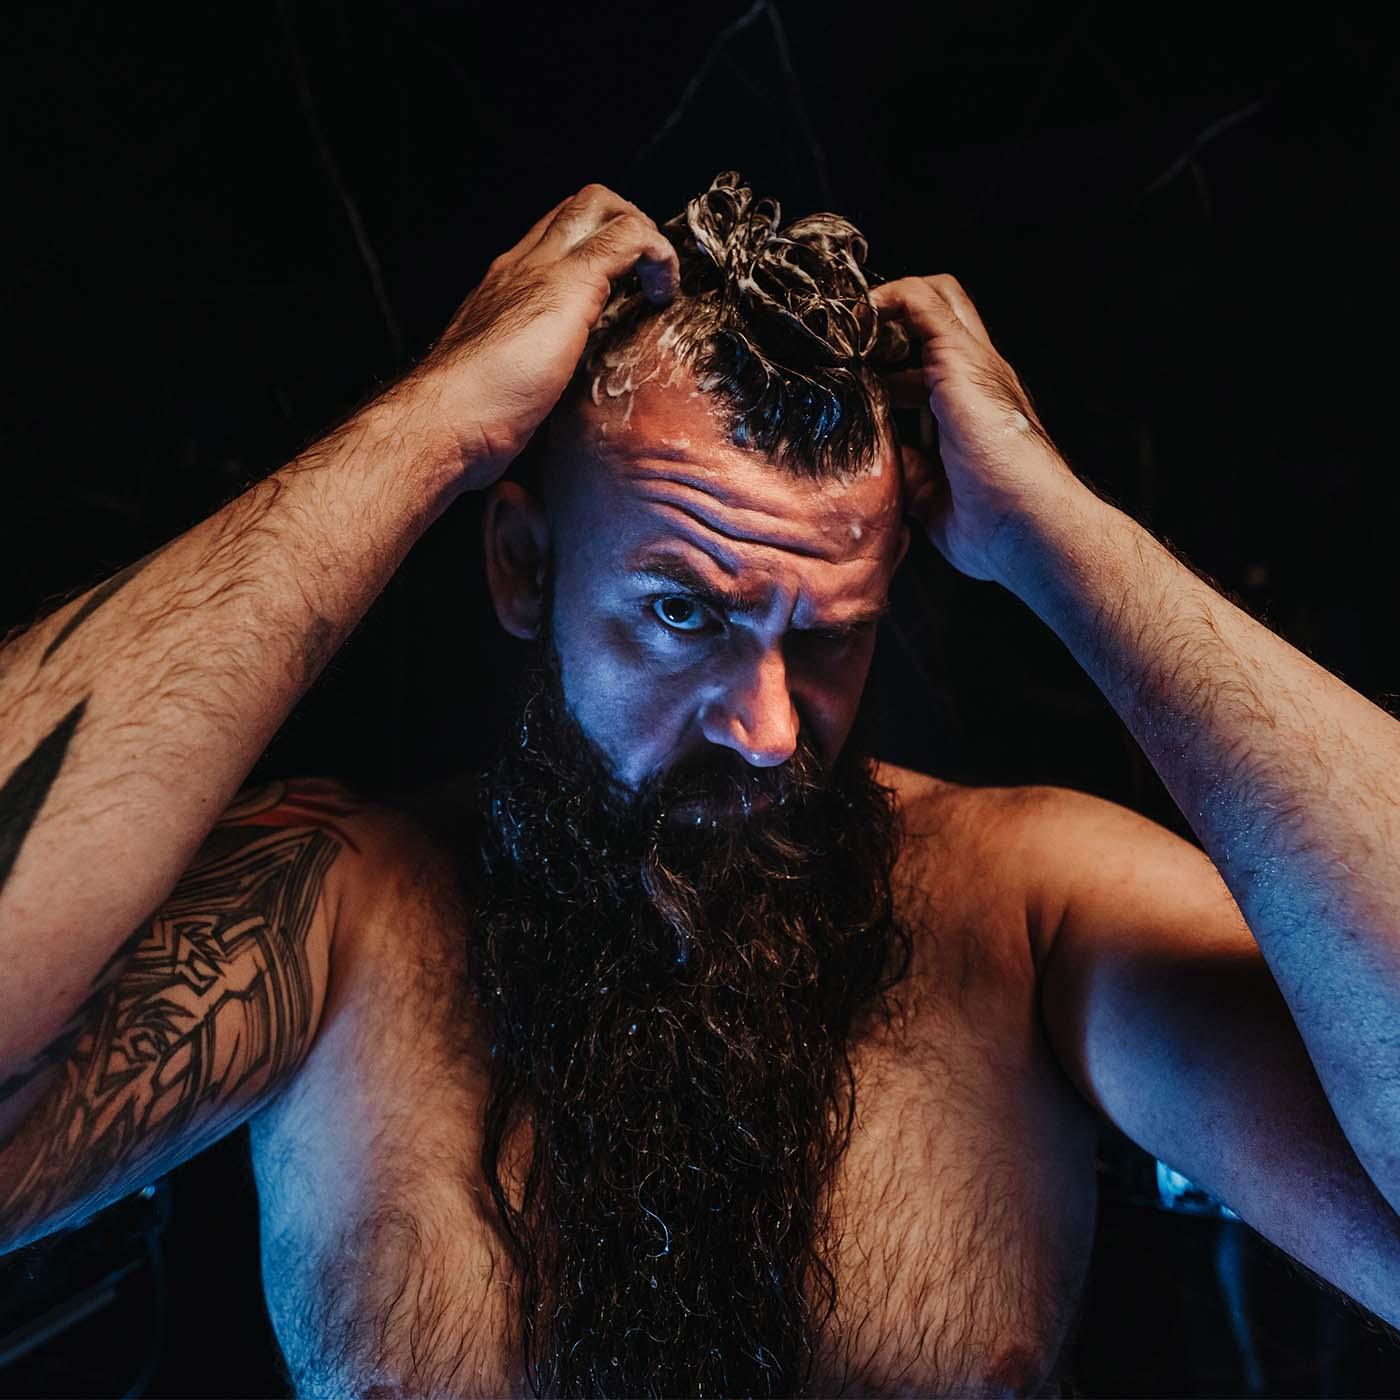 Angry Beards Urban Twofinger Hair Shampoo | Sjampo | Angry Beards | JK SHOP | JK Barber og herre frisør | Lavepriser | Best